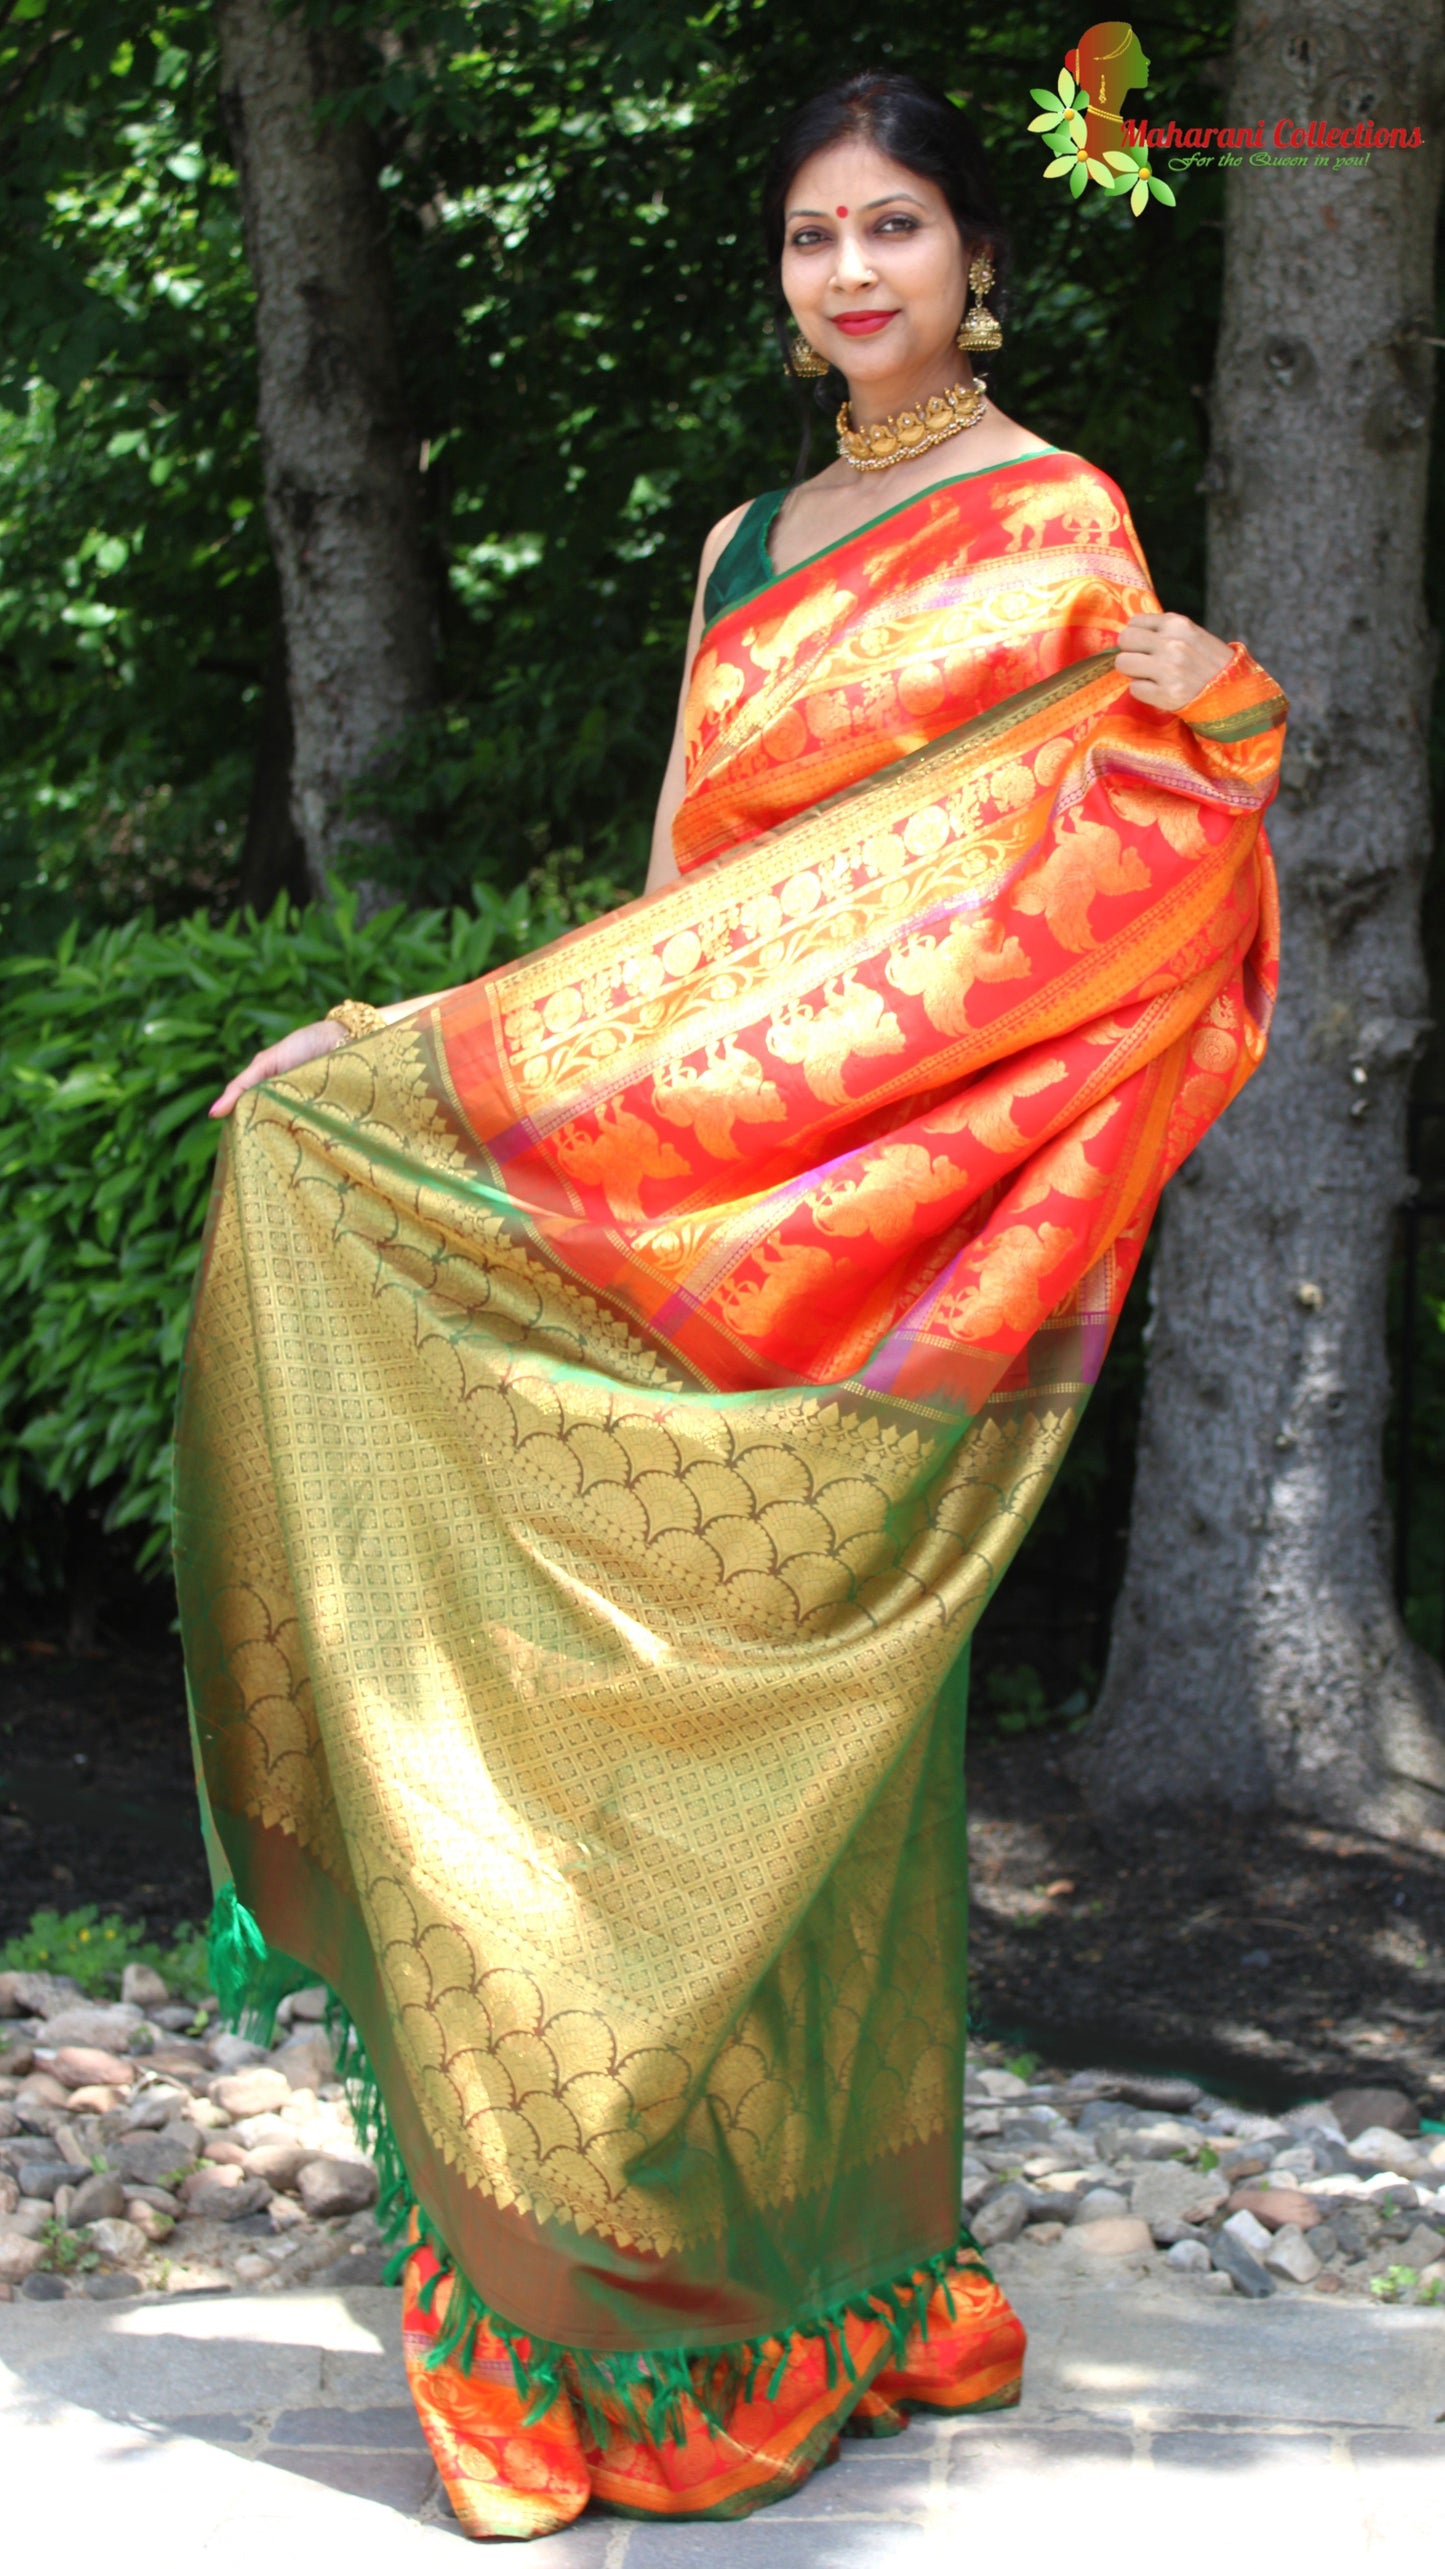 Maharani's Pure Handloom Kanjivaram Silk Saree - Bridal Red with Golden Zari and Boota Work